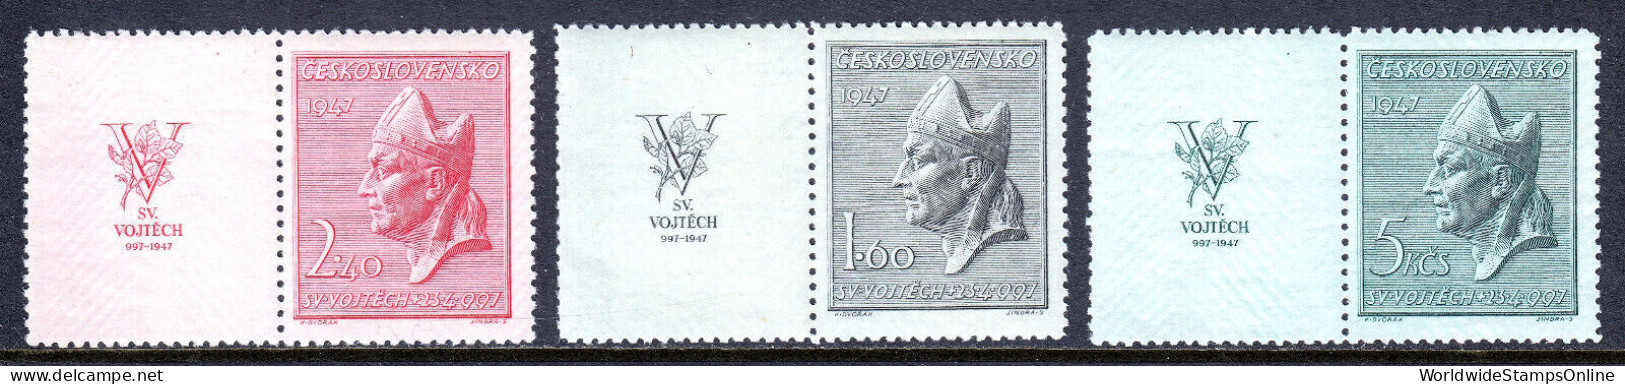 CZECHOSLOVAKIA — SCOTT 326-328 — 1947 ST. ADALBERT SET — MLH W/LABELS— SCV $40 - Unused Stamps